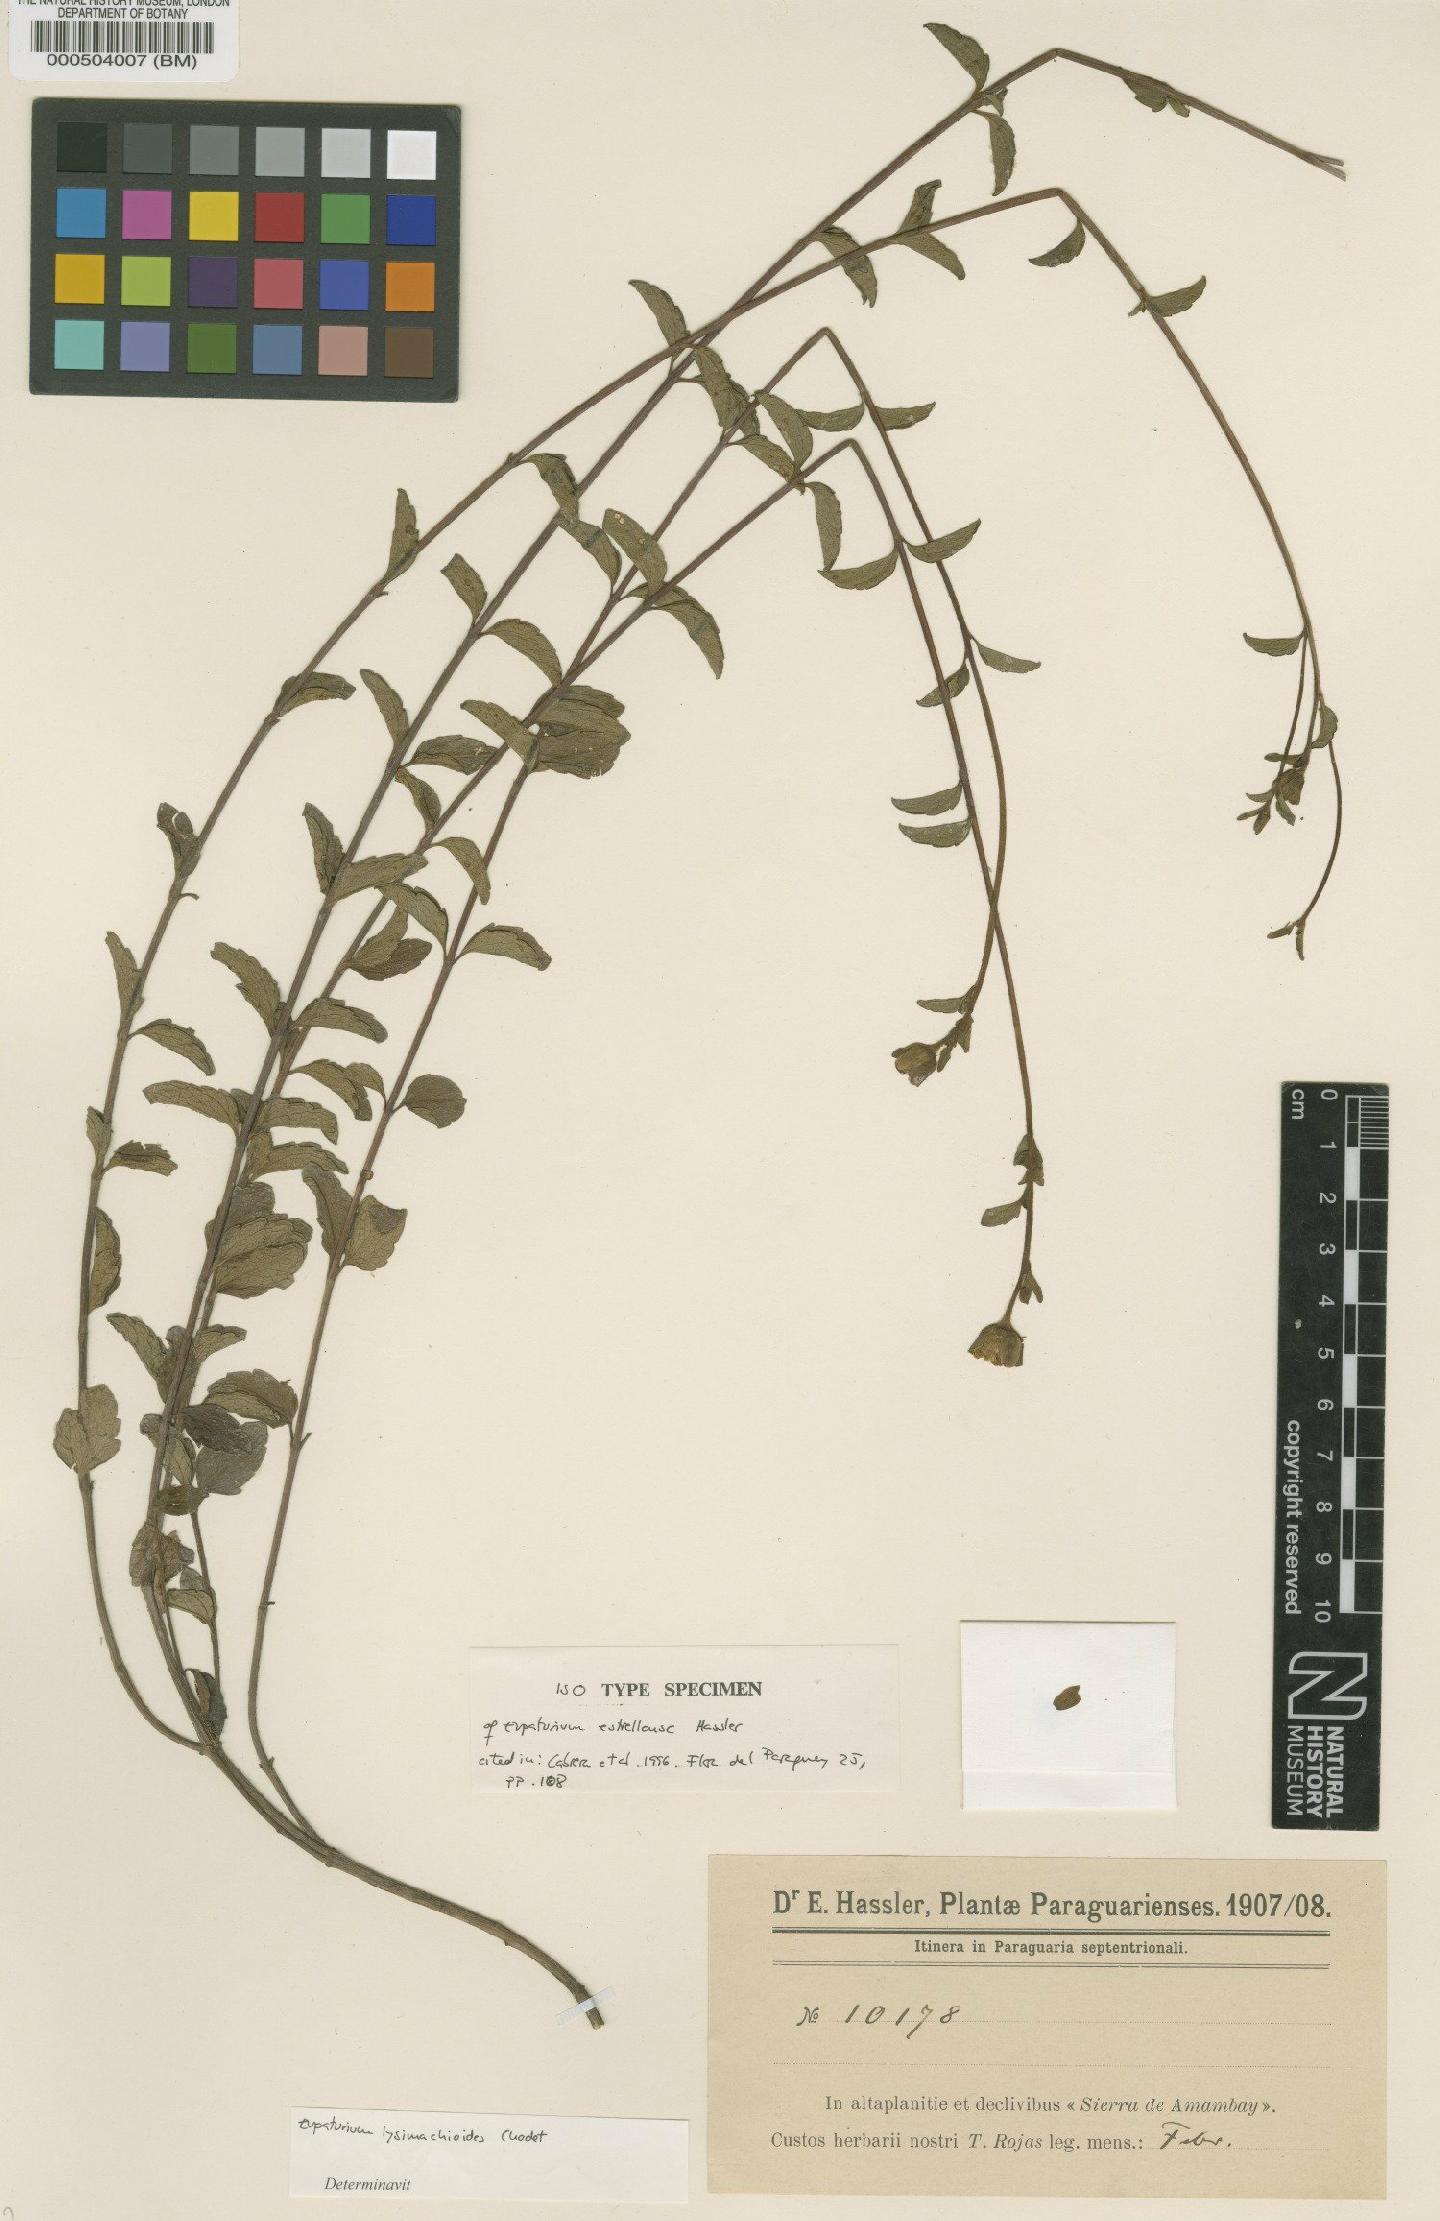 To NHMUK collection (Eupatorium lysimachioides Chodat; Isotype; NHMUK:ecatalogue:4565951)